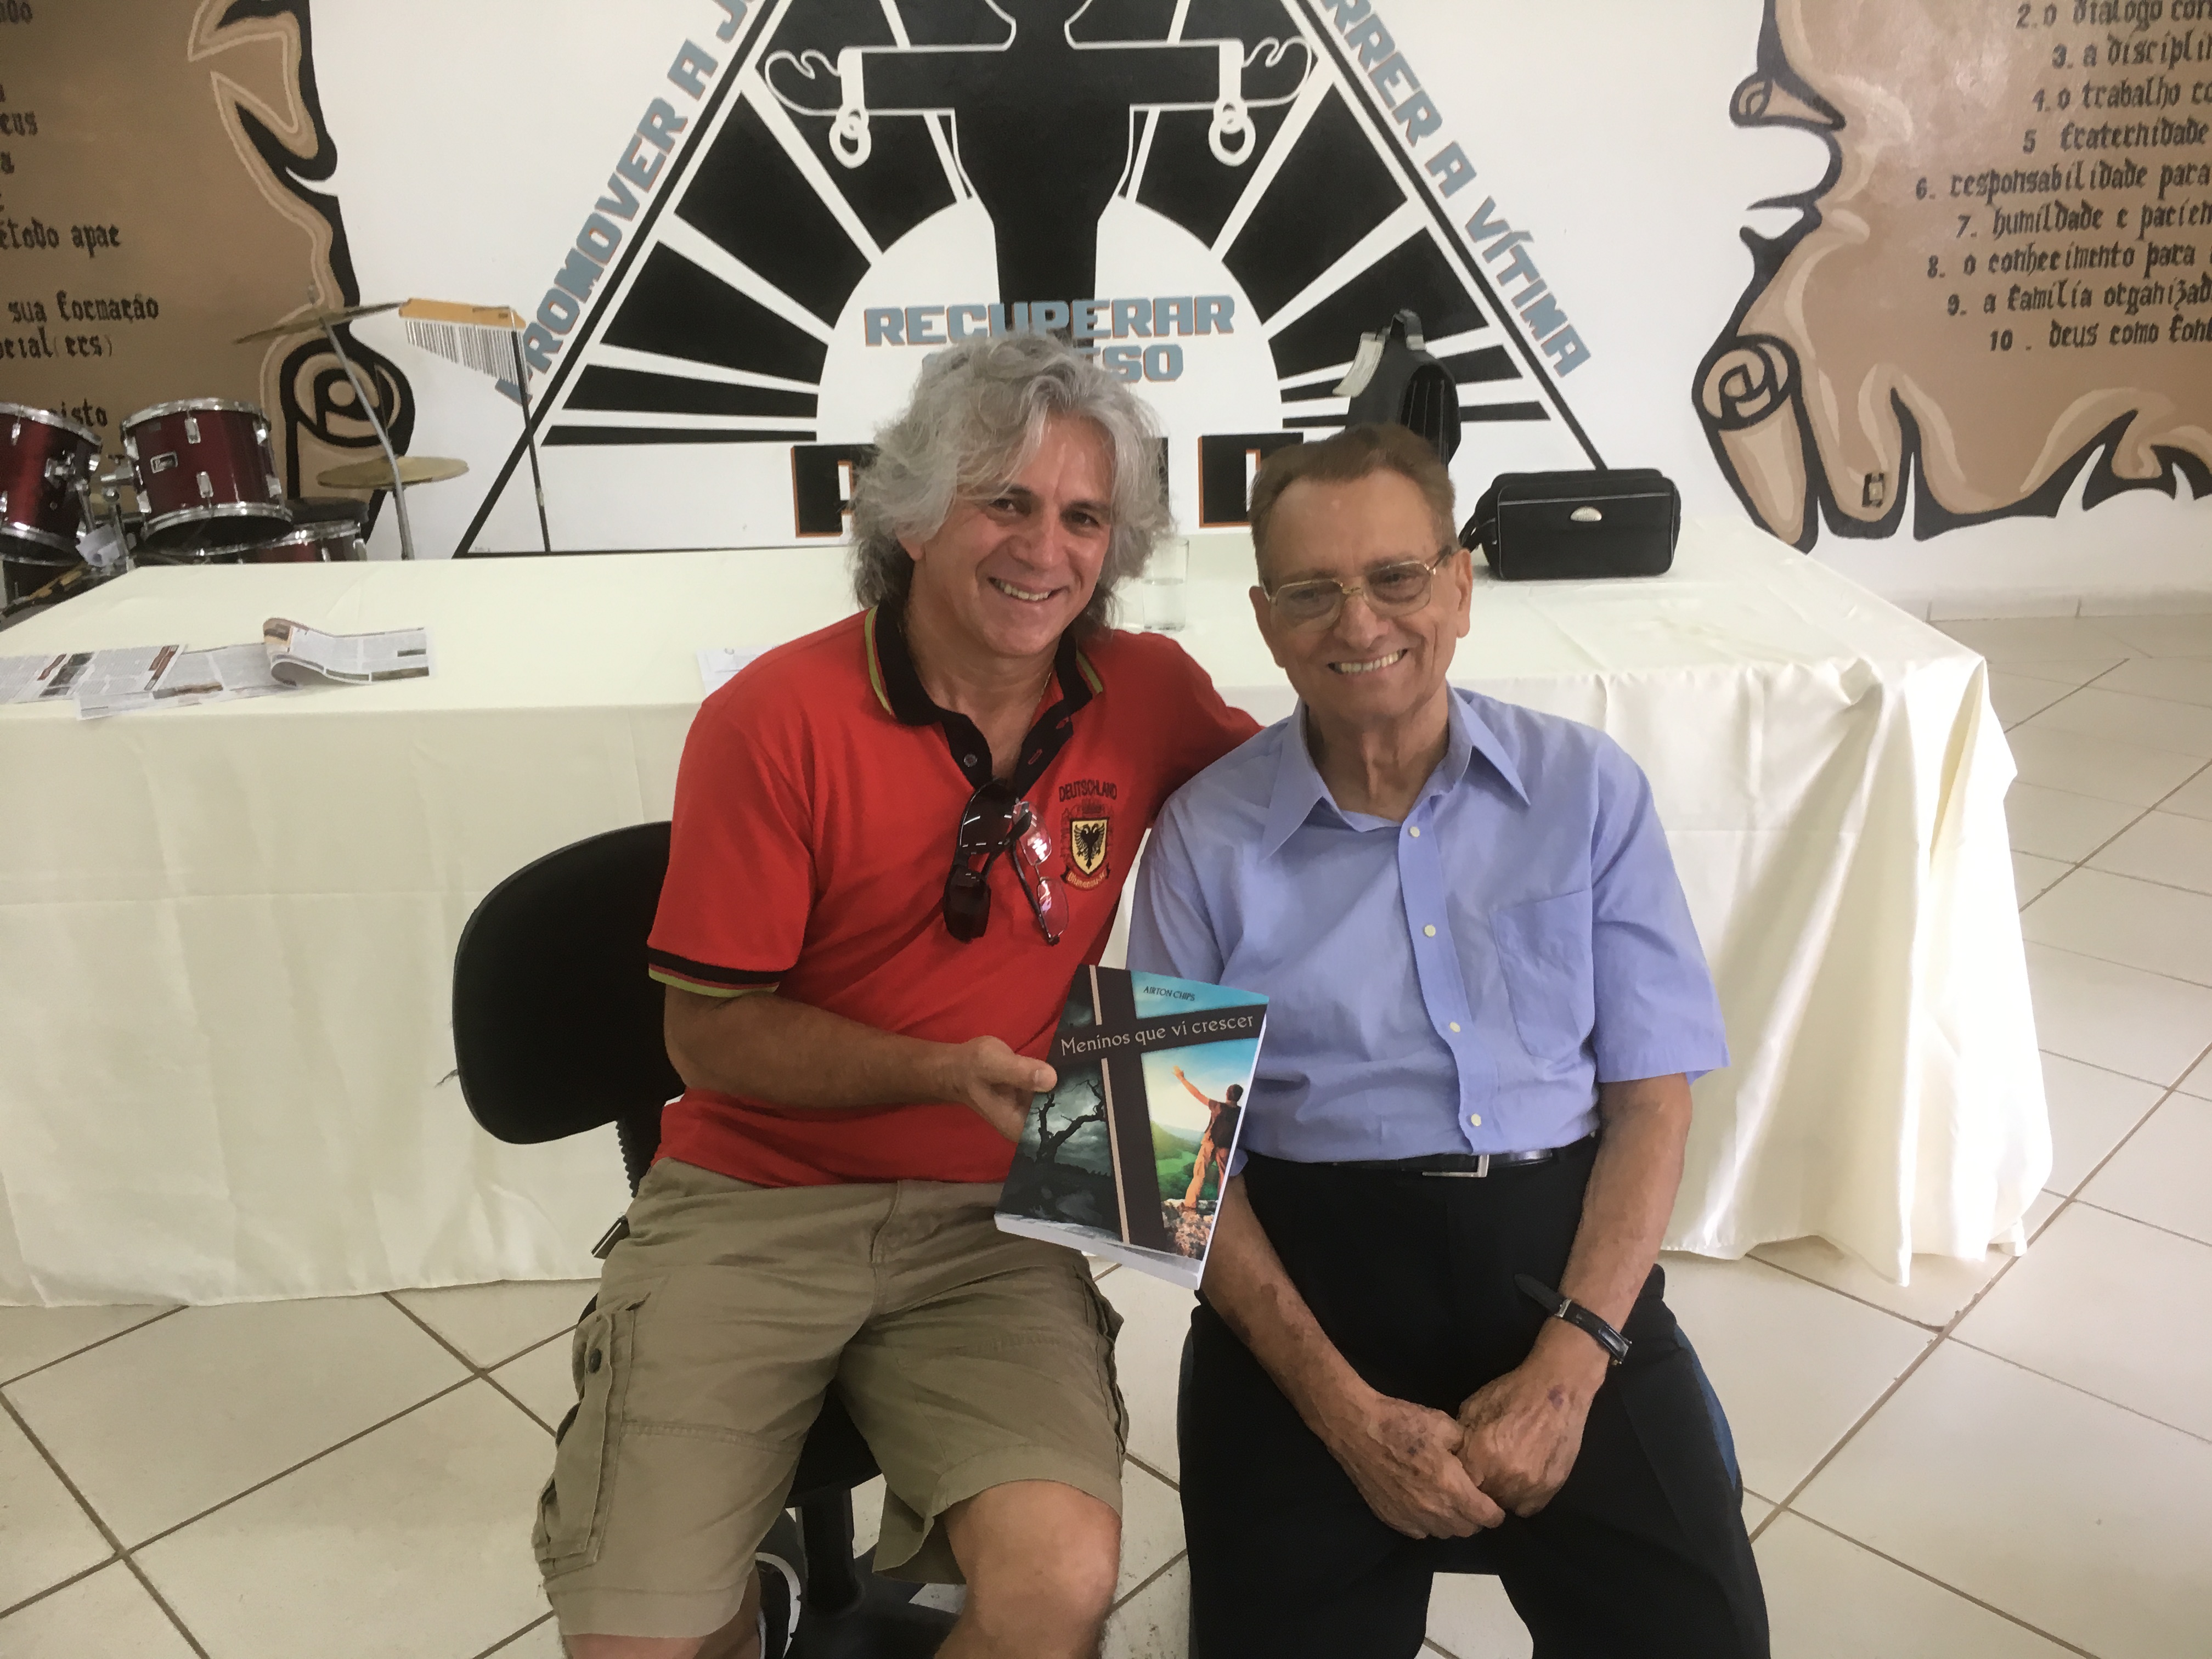 Mario Otoboni, 'tutor' de tantos 'meninos', recebendo o exemplar do livro 